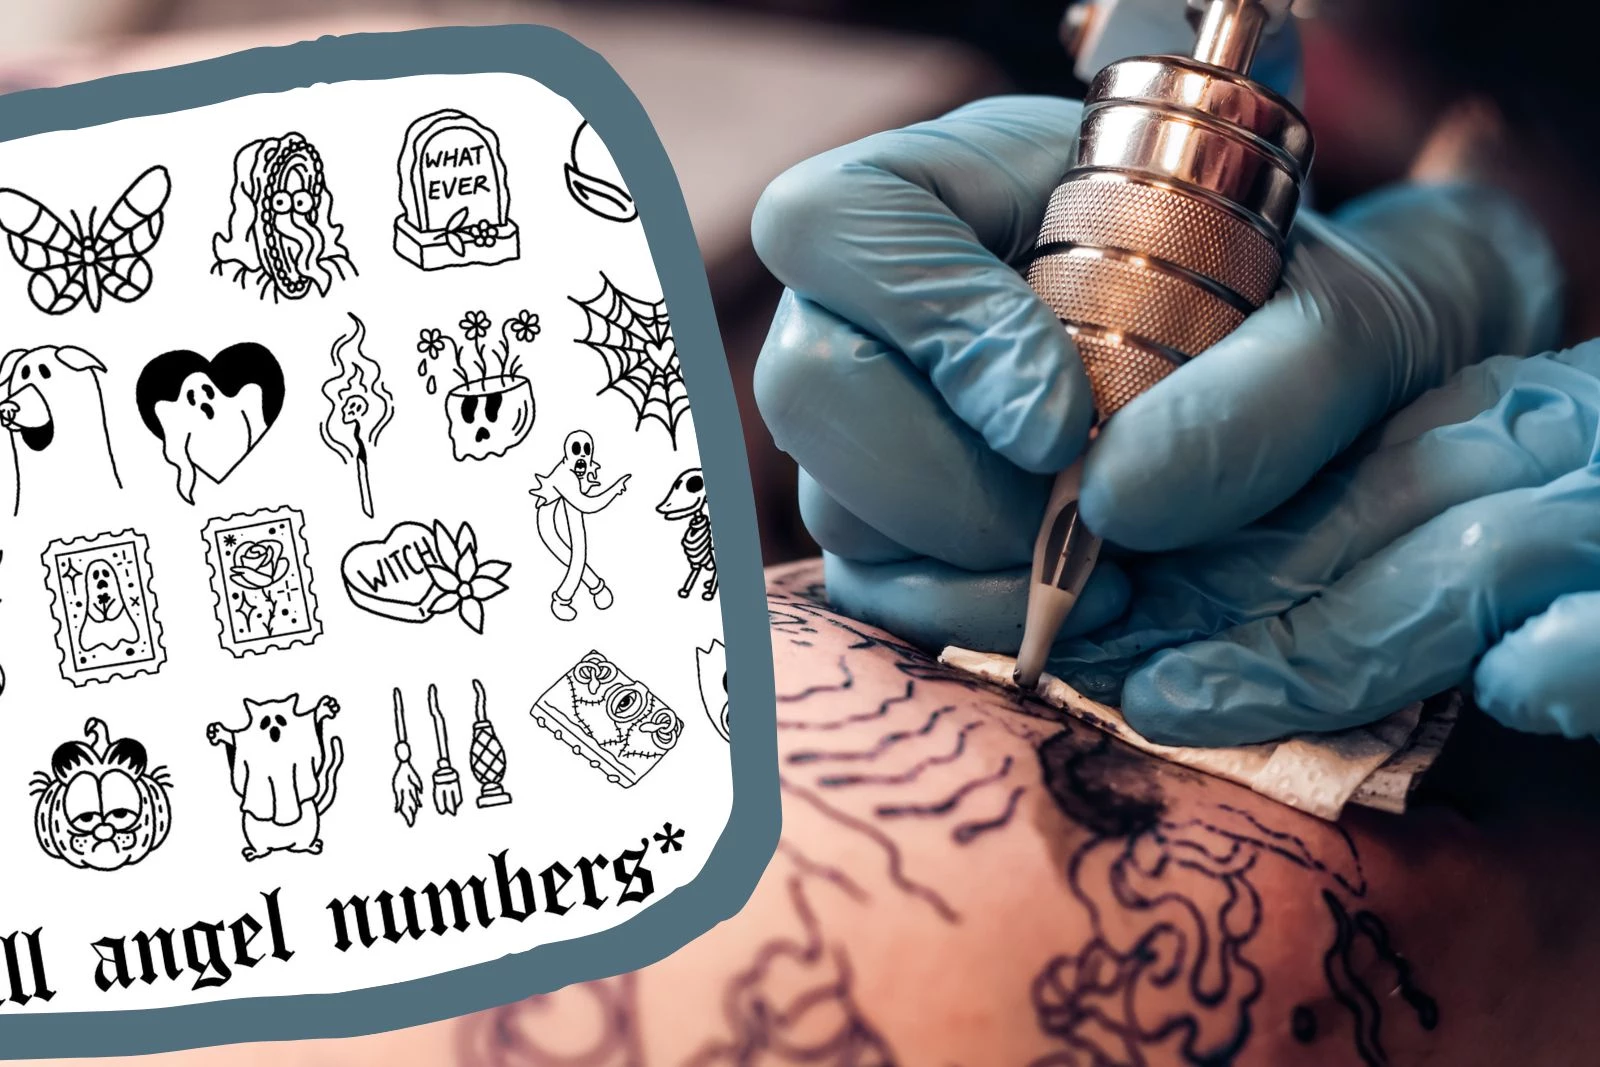 Watch Javier Baez Breaks Down His Tattoos, Tattoo Tour